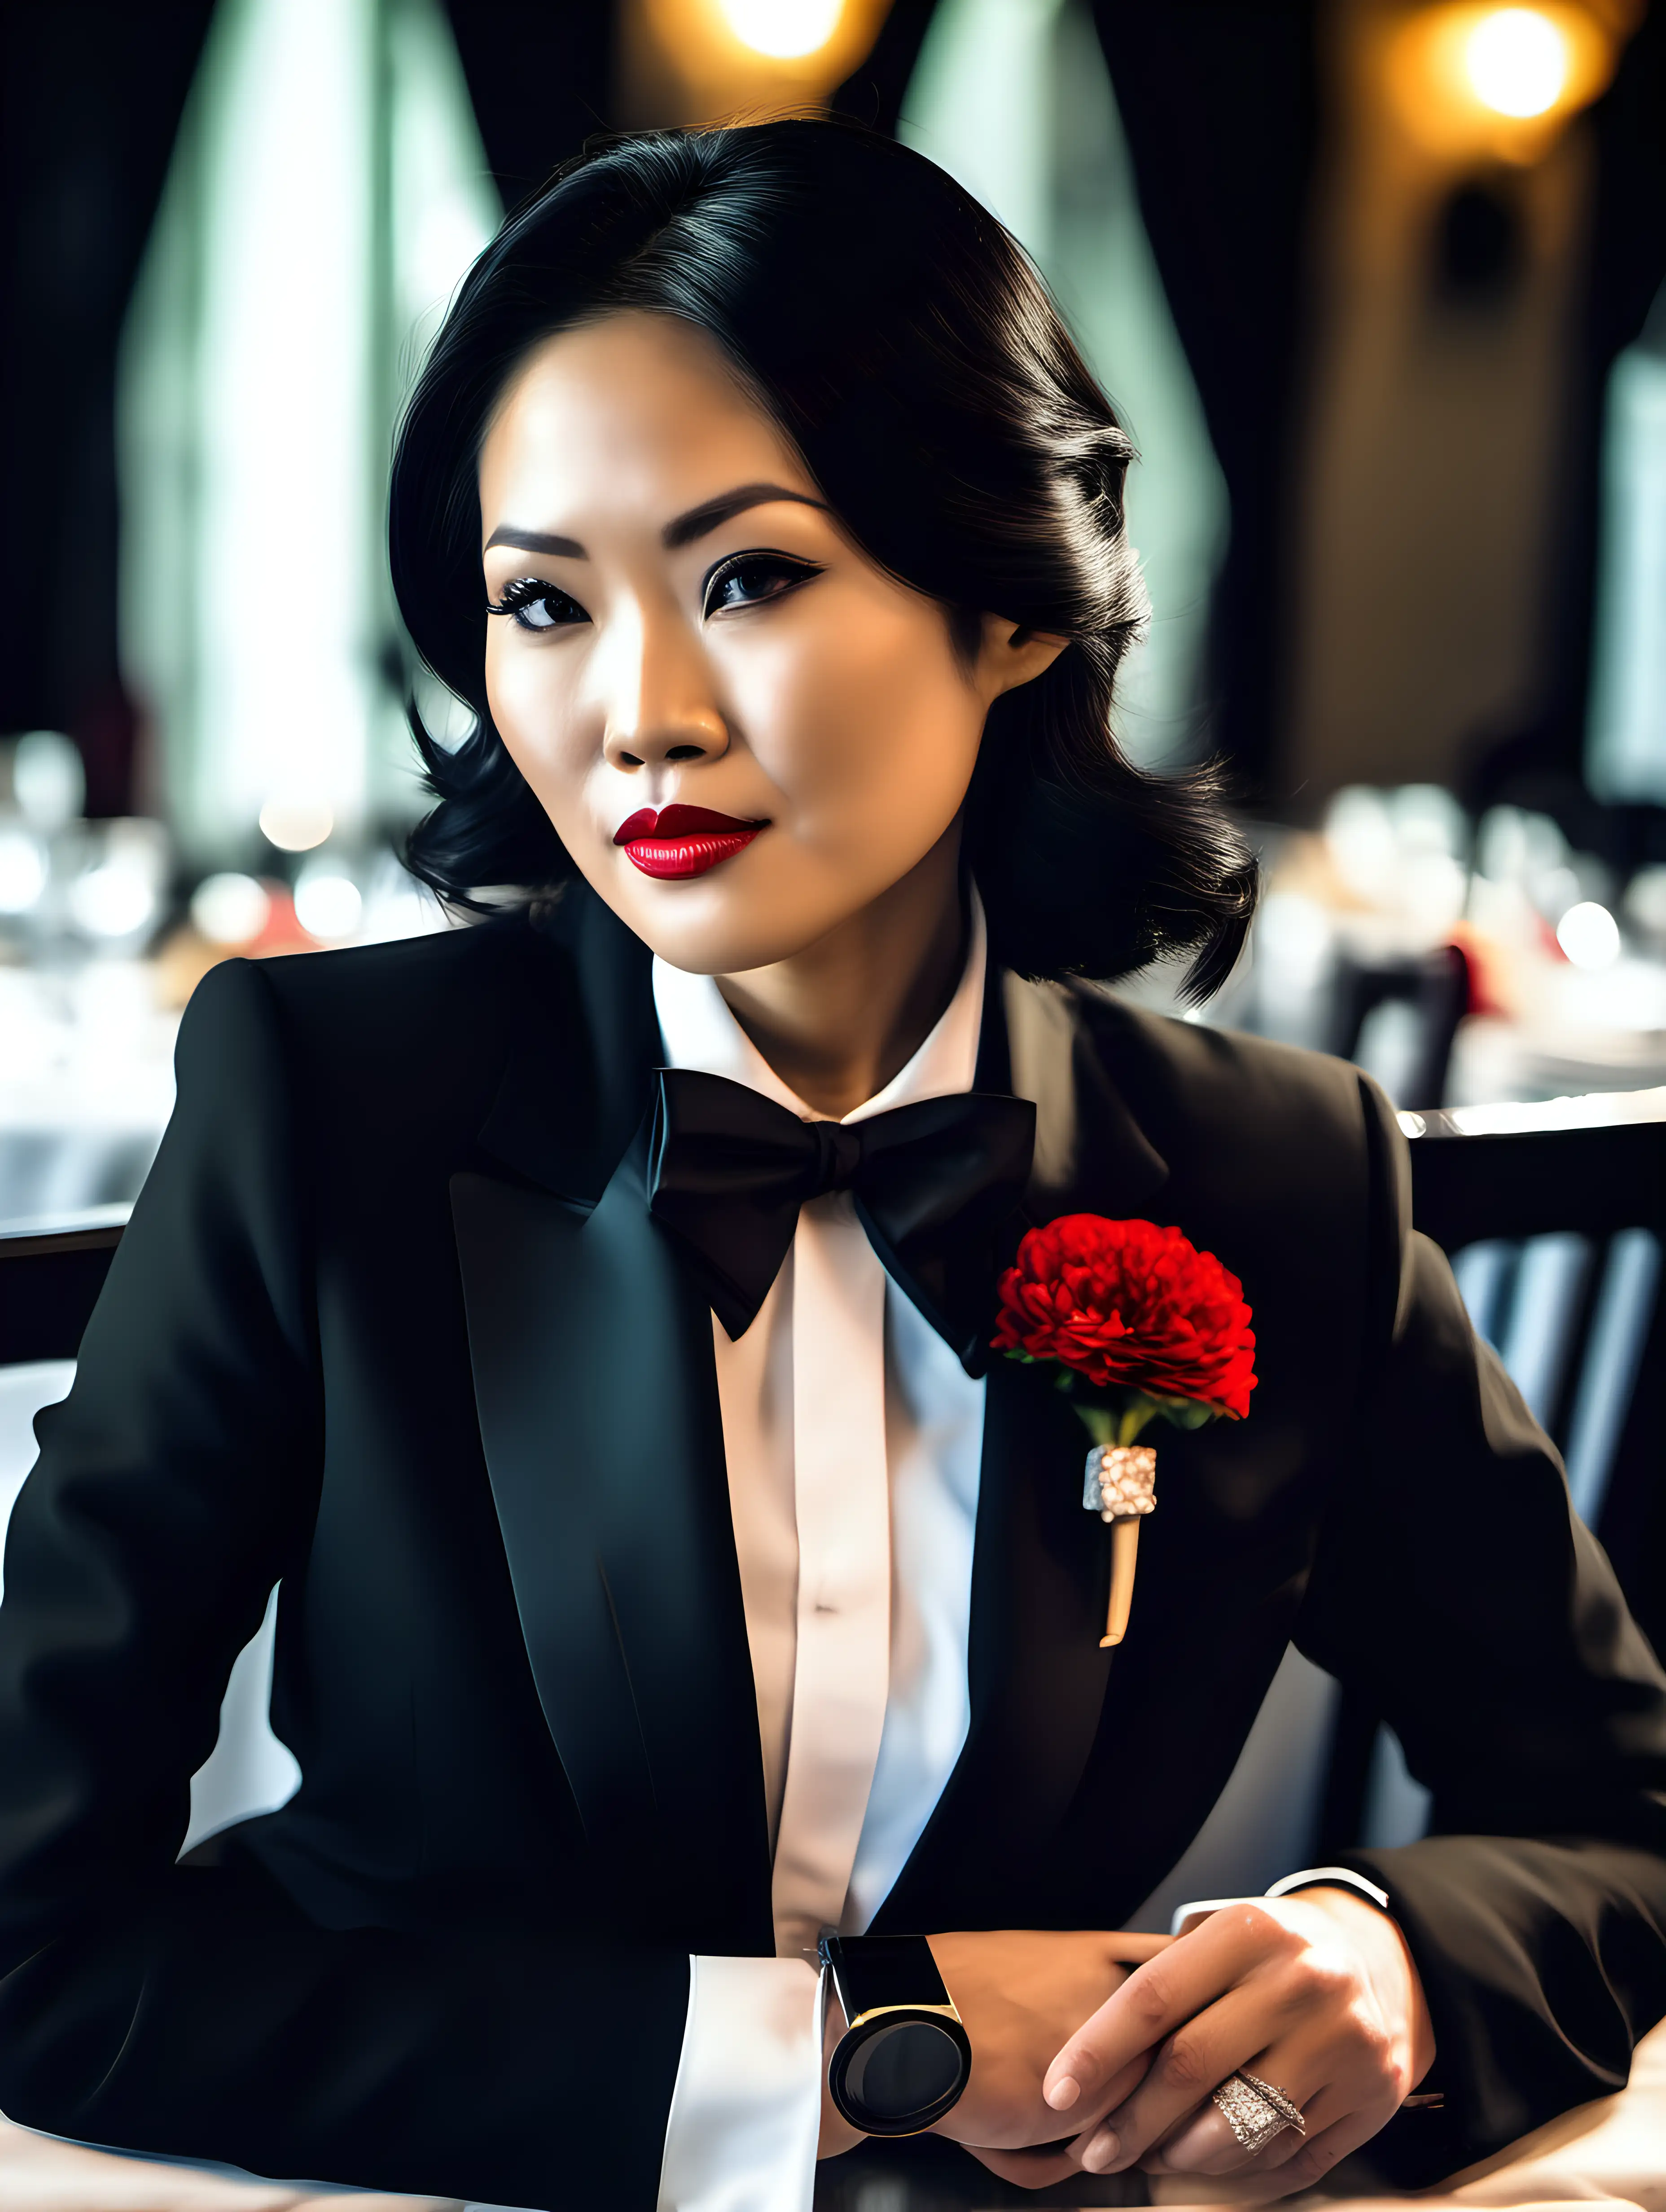 Elegant-Vietnamese-Woman-in-Formal-Tuxedo-at-Dining-Table